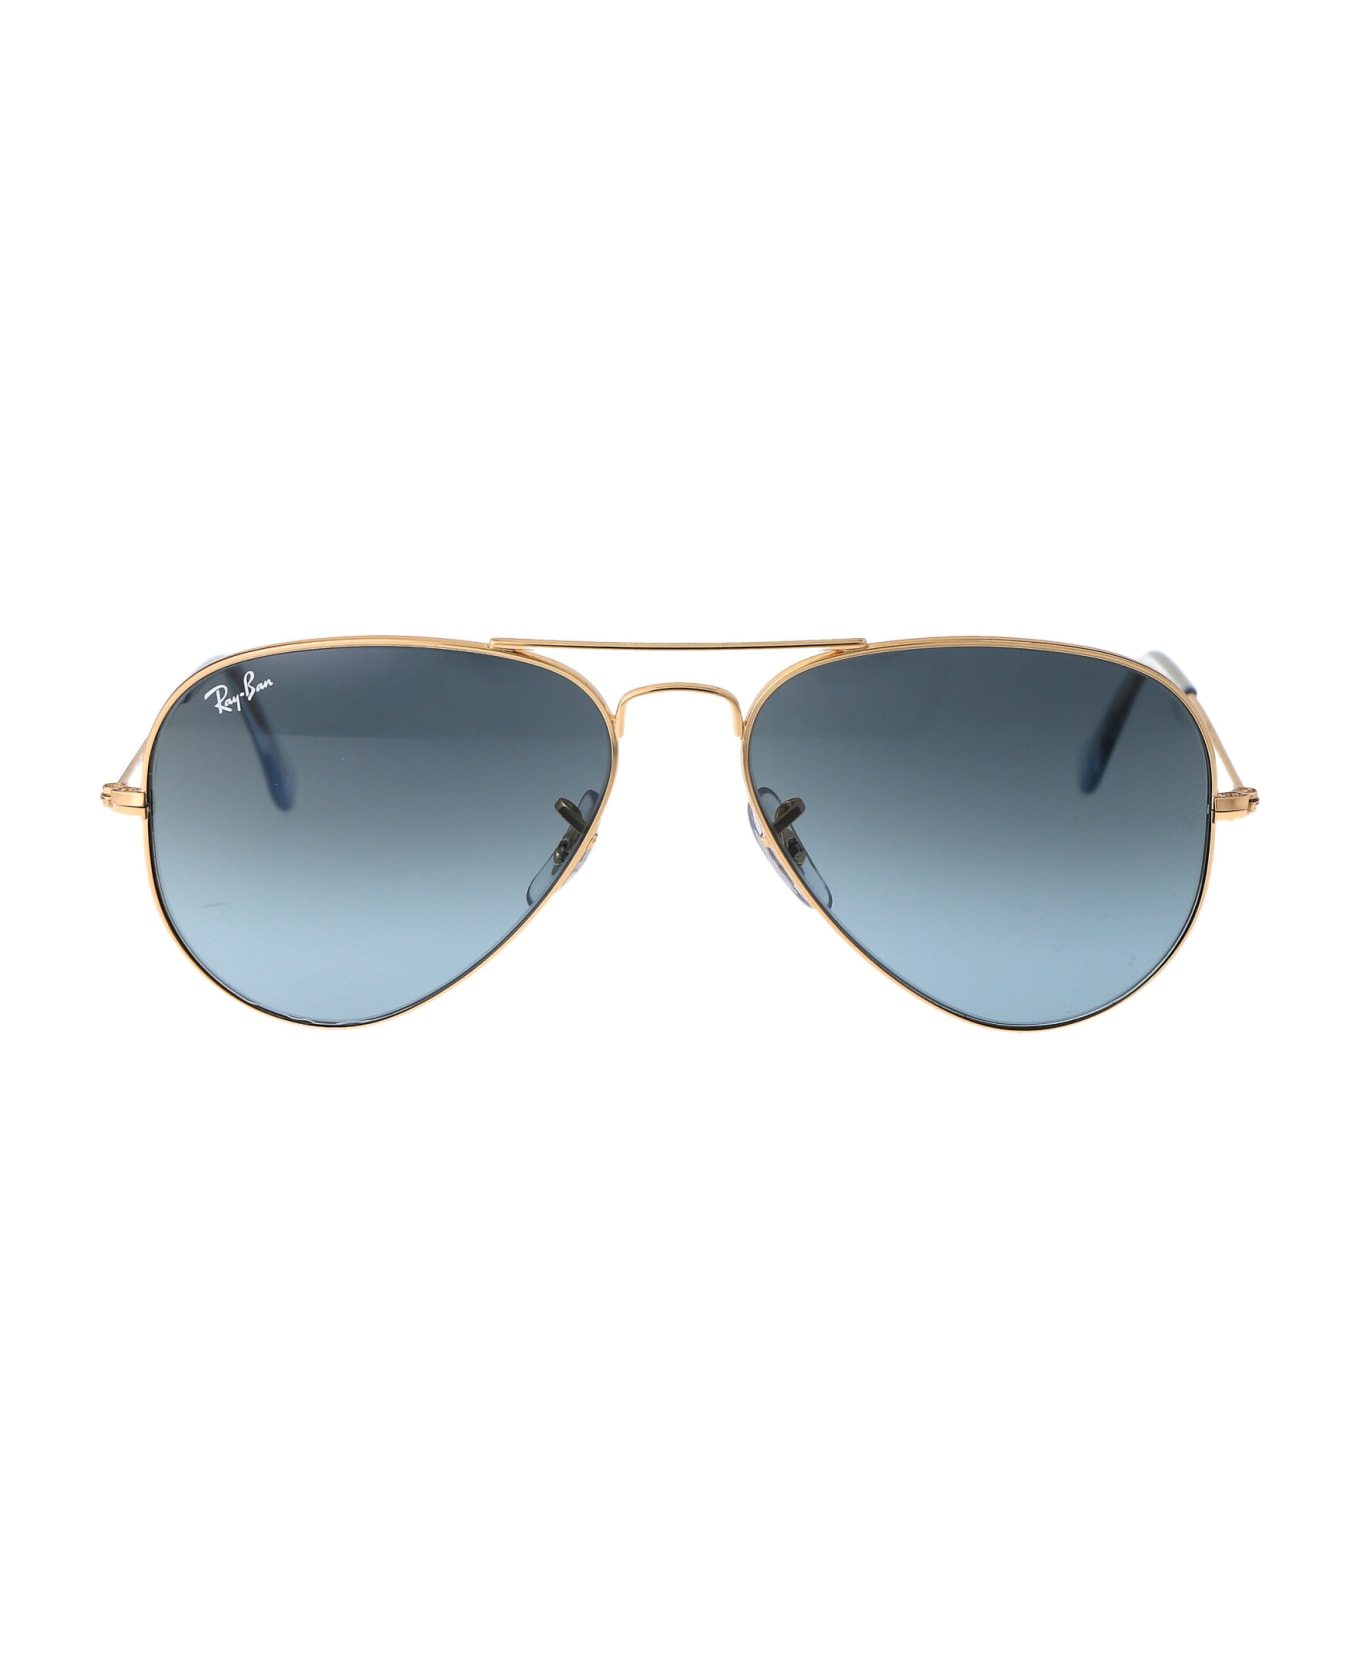 Ray-Ban Aviator Sunglasses - 001/3M GOLD